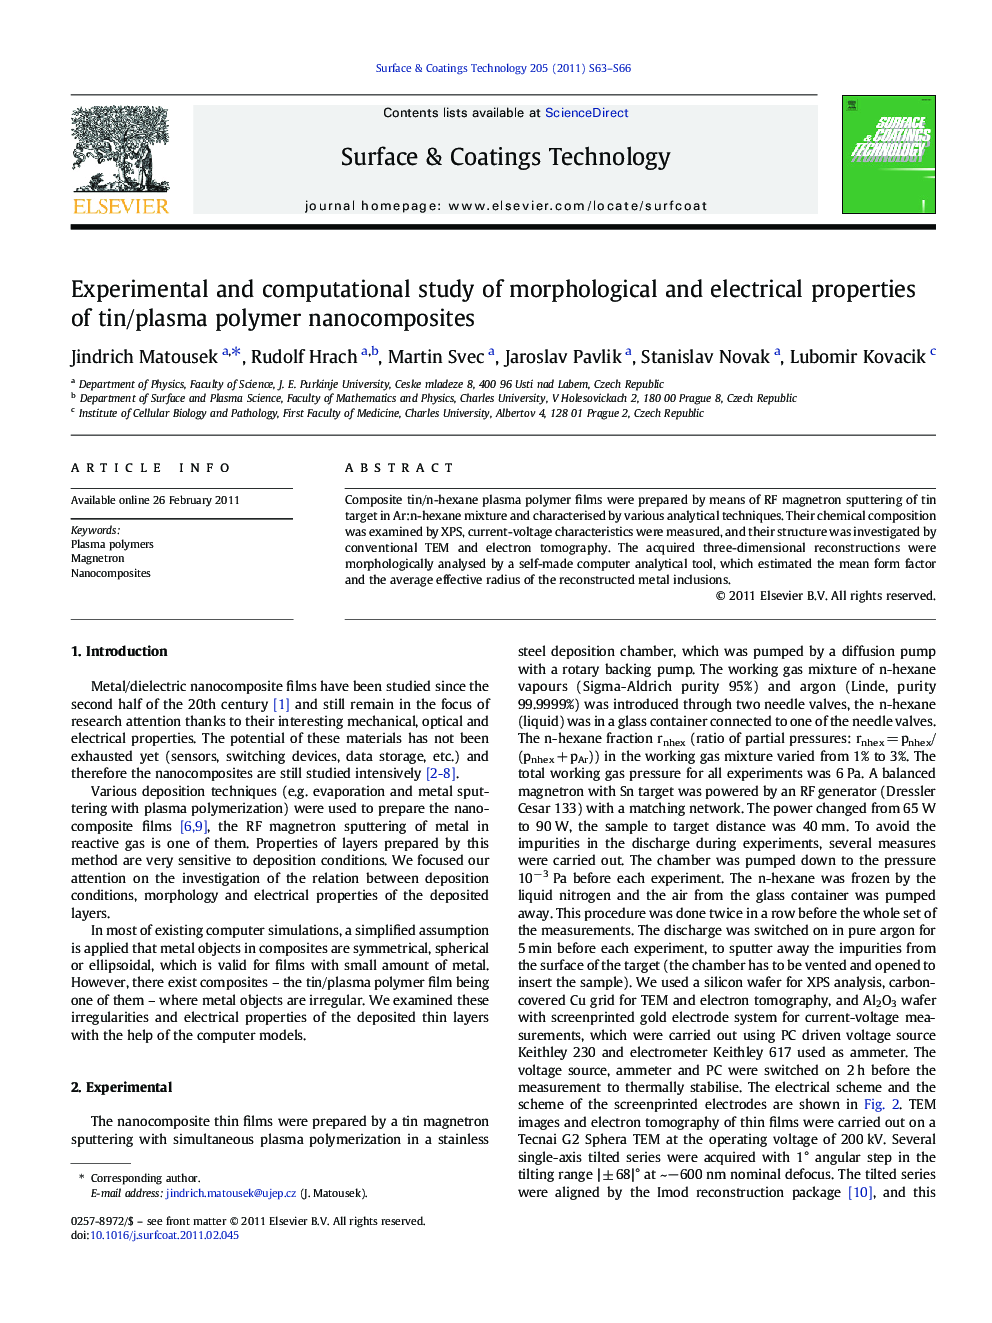 Experimental and computational study of morphological and electrical properties of tin/plasma polymer nanocomposites